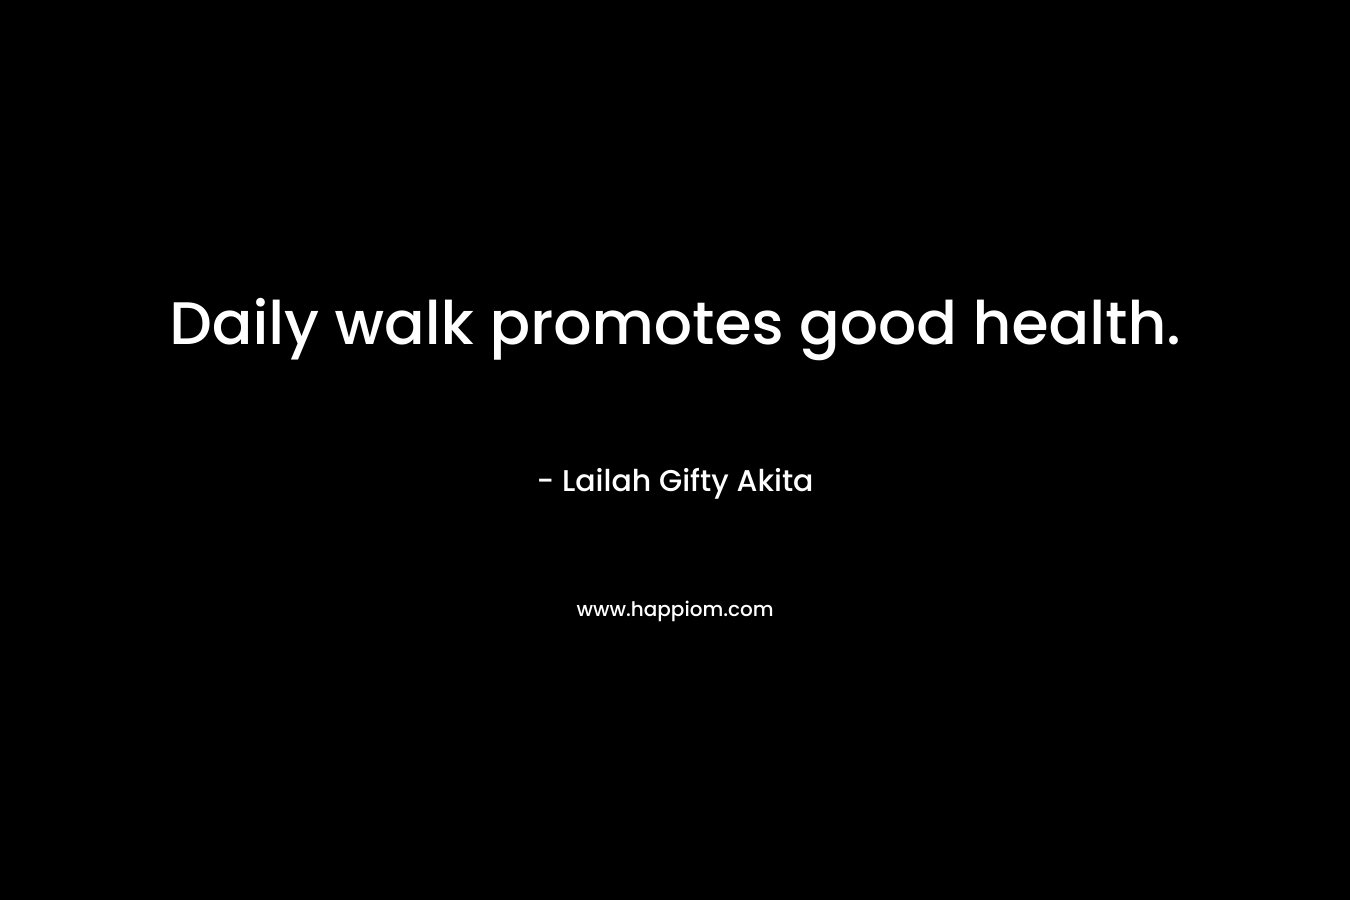 Daily walk promotes good health.